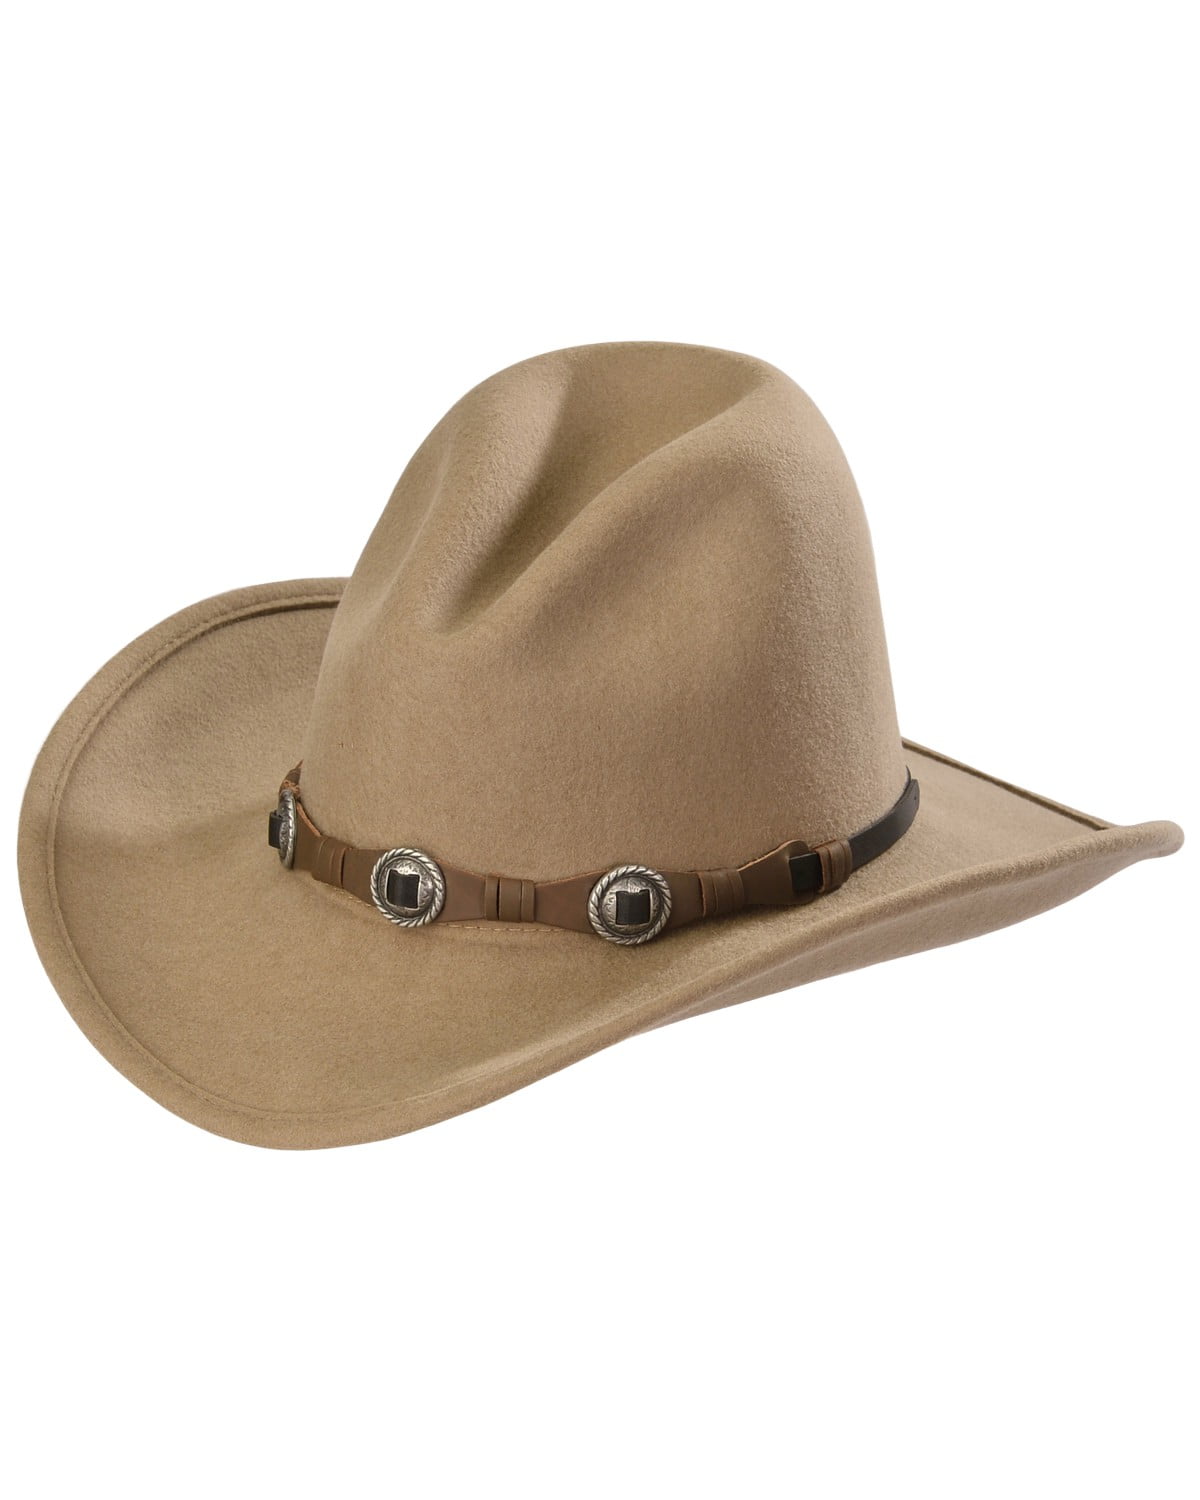 UDIYO Cowboy Hat Hollow Out Curled Edge Wide Brim,Men & Women's